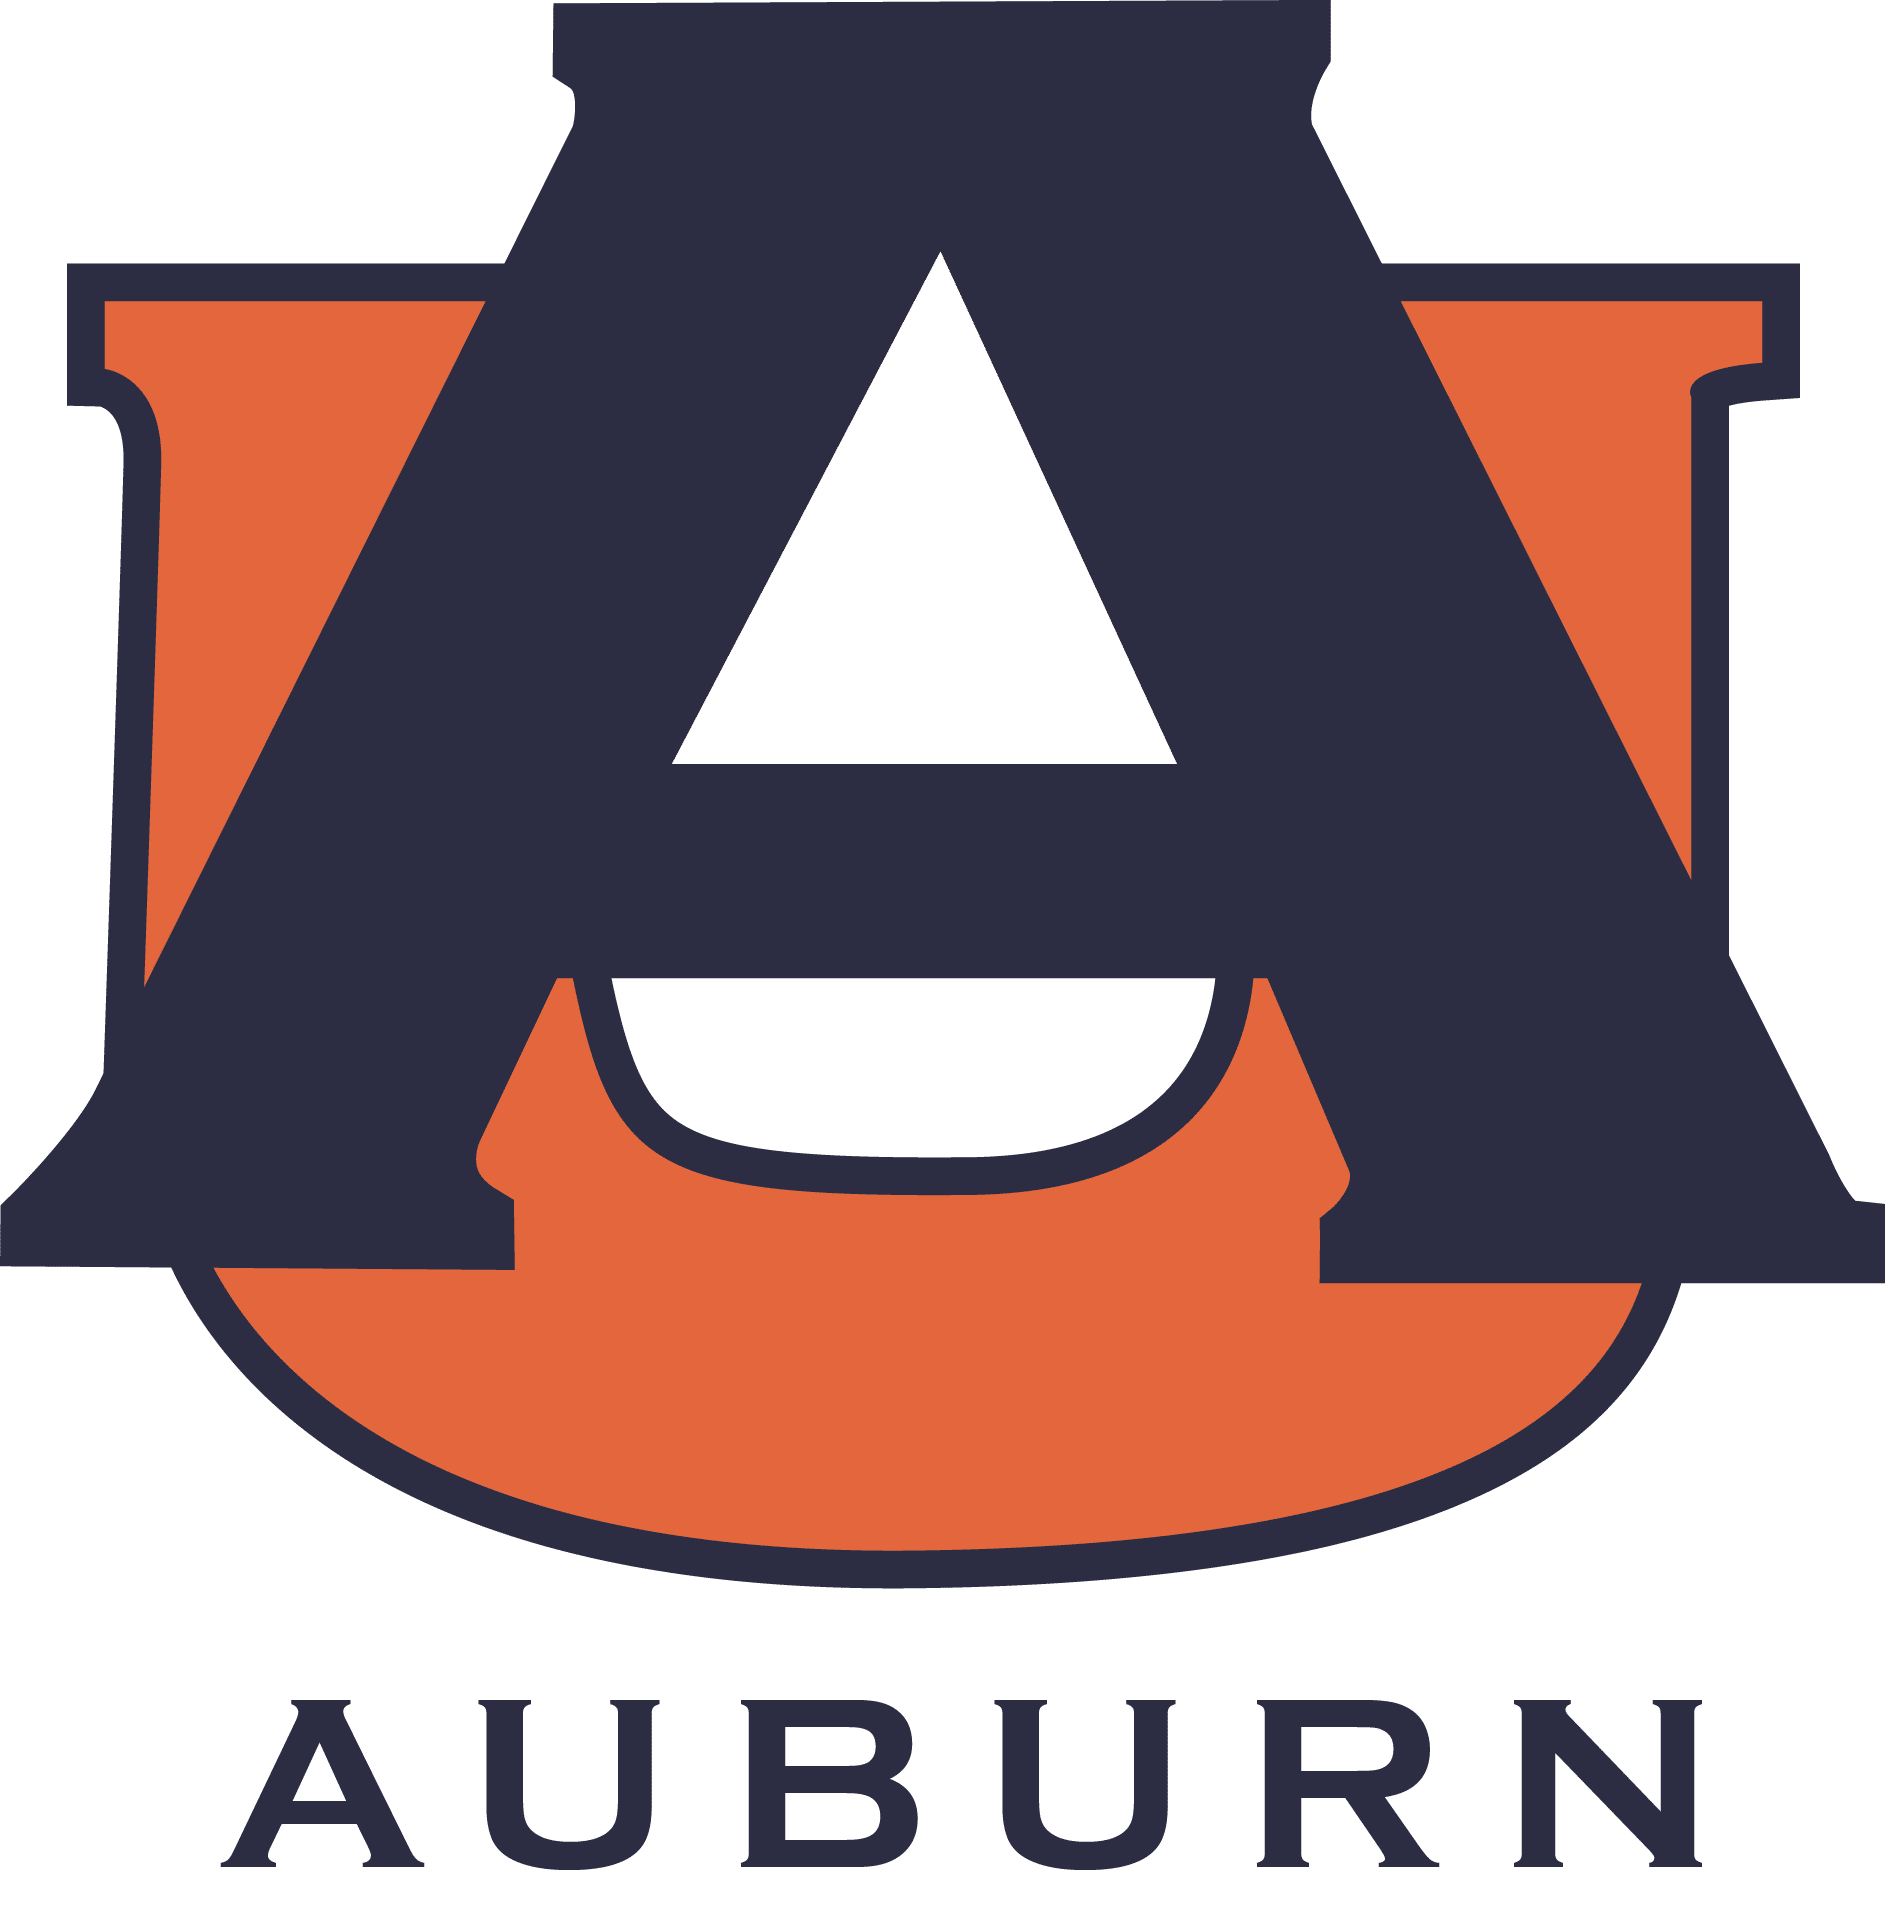 Auburn Almost Changed Logos in 1995 - Auburn Uniform Database